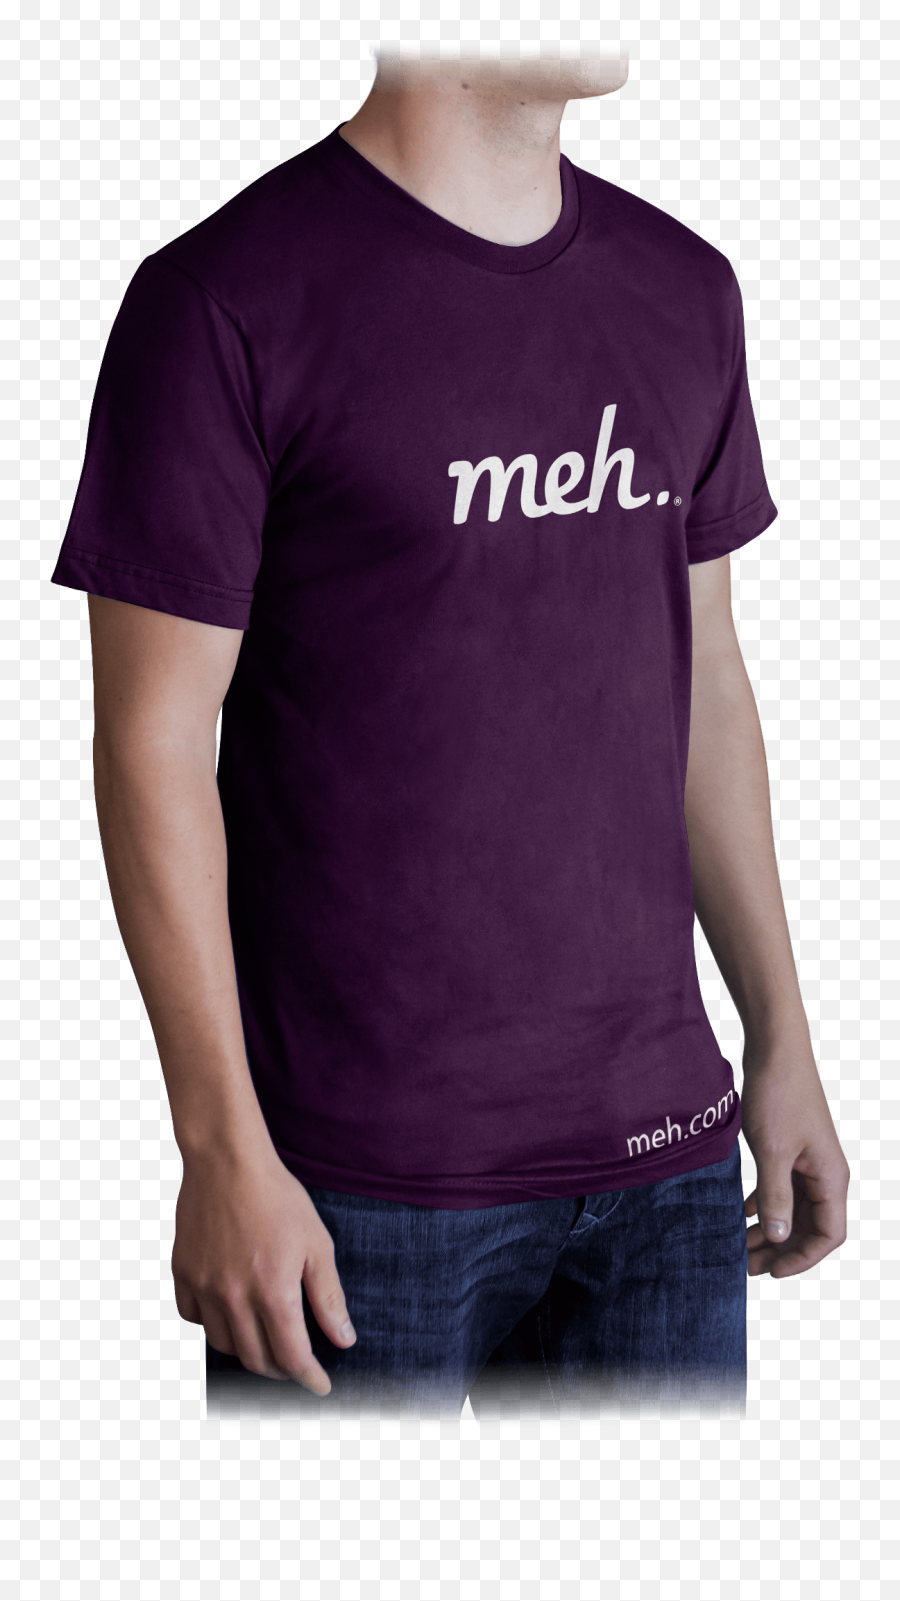 Meh Shirts Get Your Meh Shirts Here - Short Sleeve Emoji,Fffff Emoticon